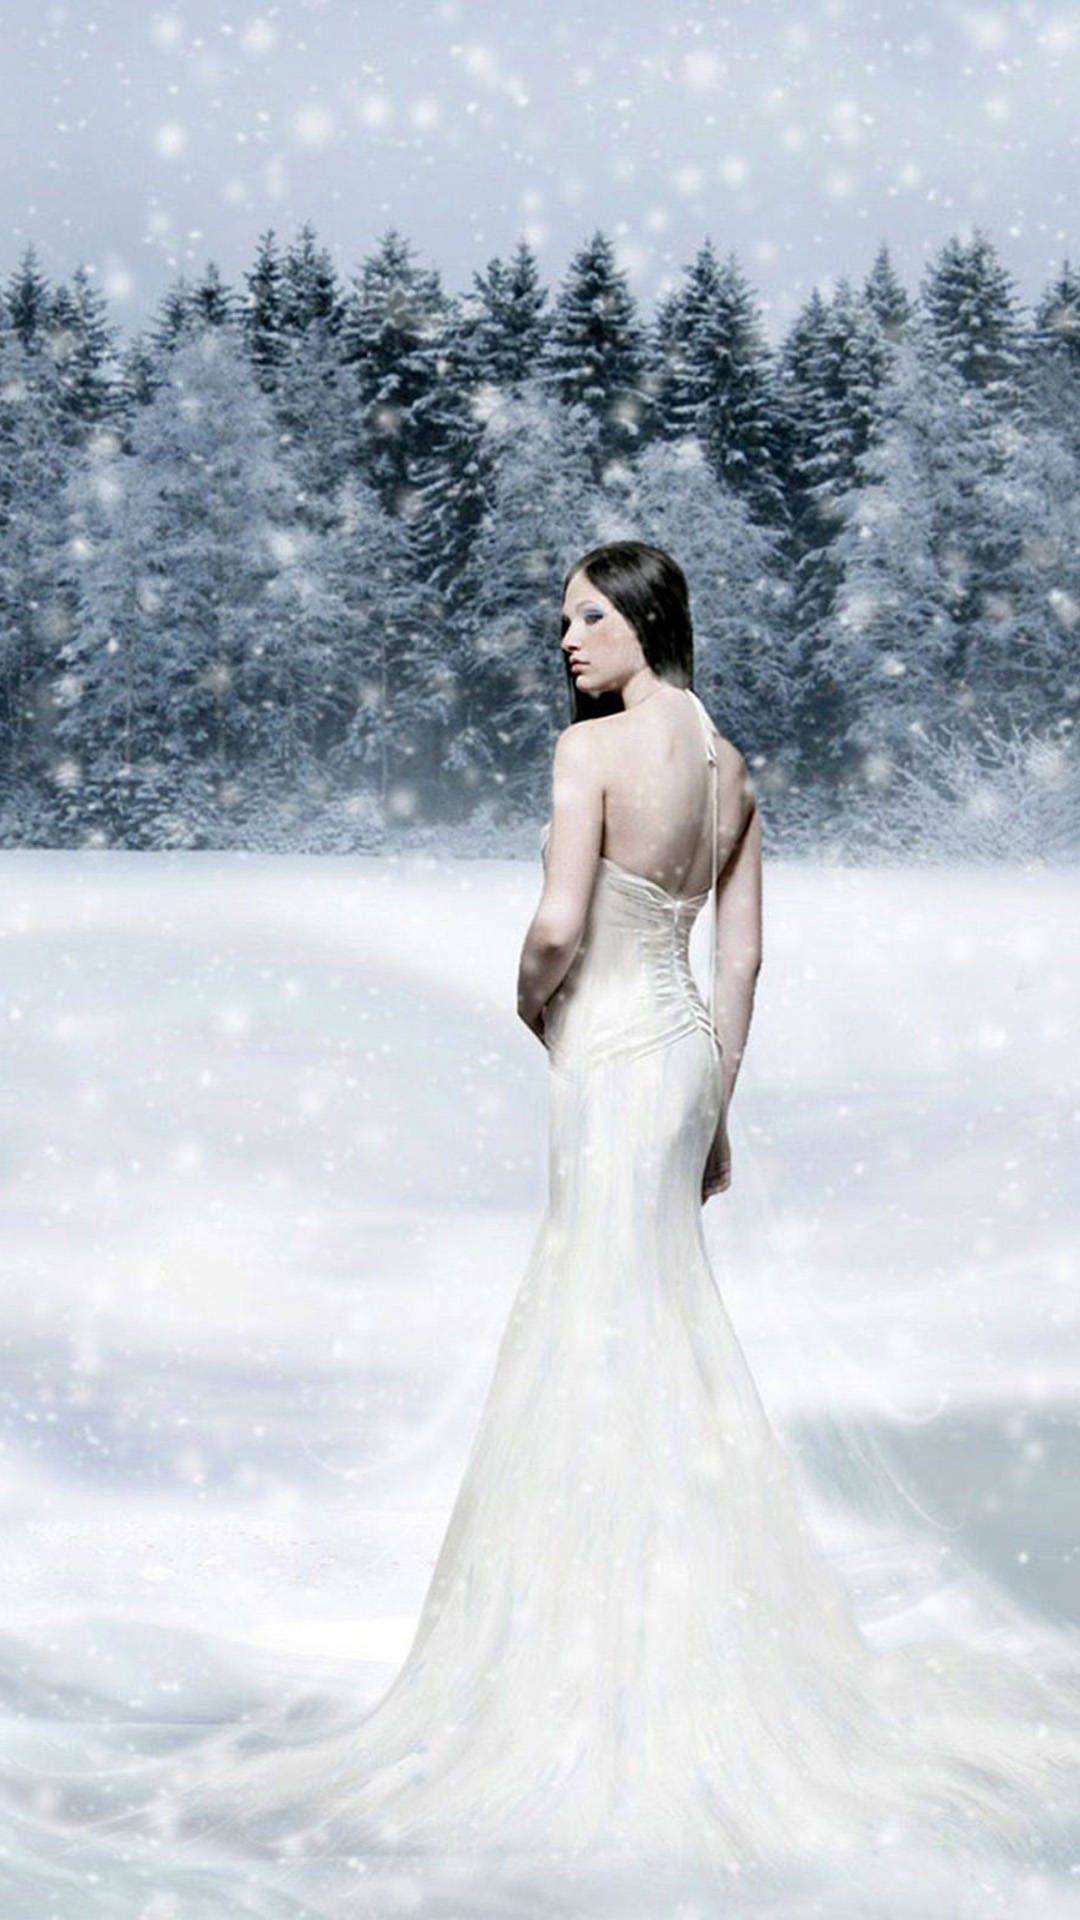 The Elegant Girl Wearing Formal Dress HD Samsung Galaxy S4 Wallpaper